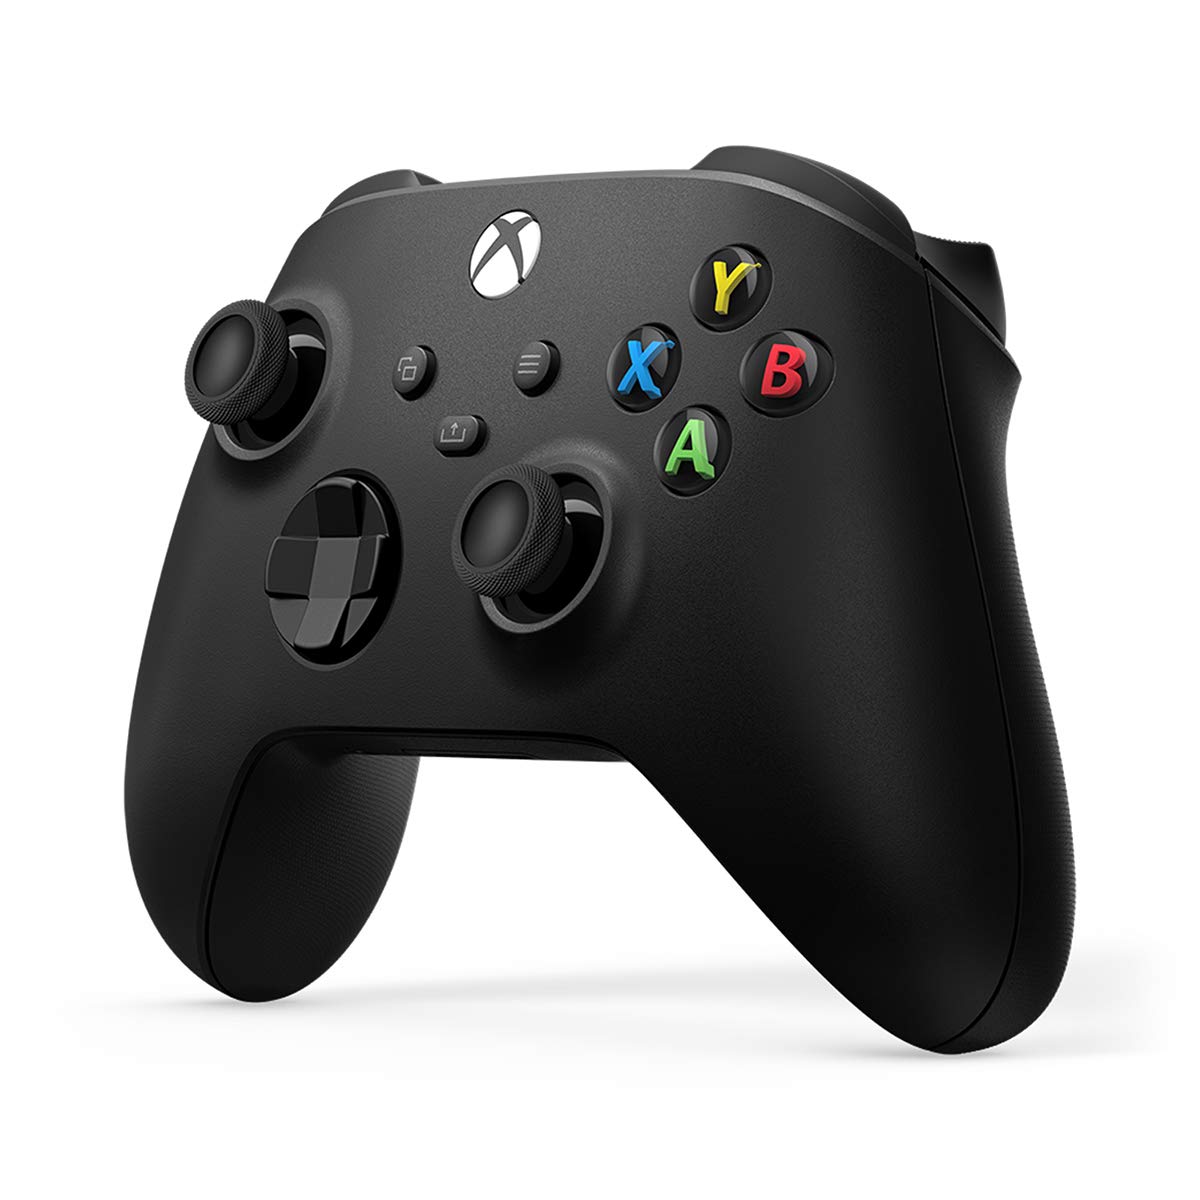 Xbox Core Controller - Carbon Black $49